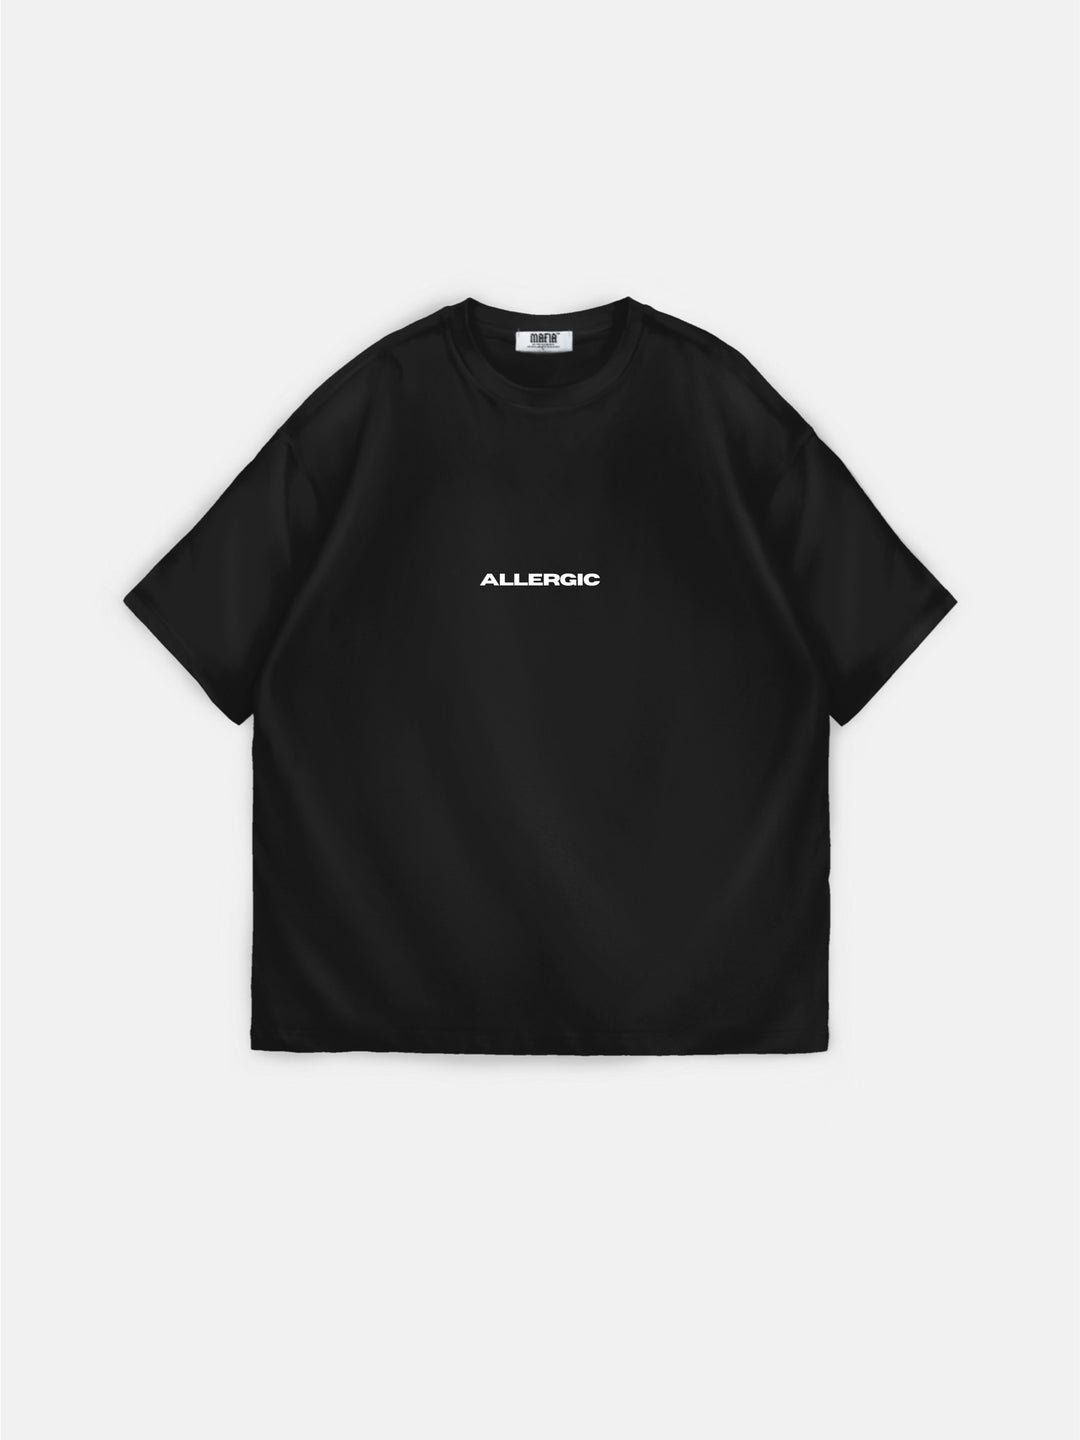 Oversize 'I am Allergic to People' T-shirt - Black